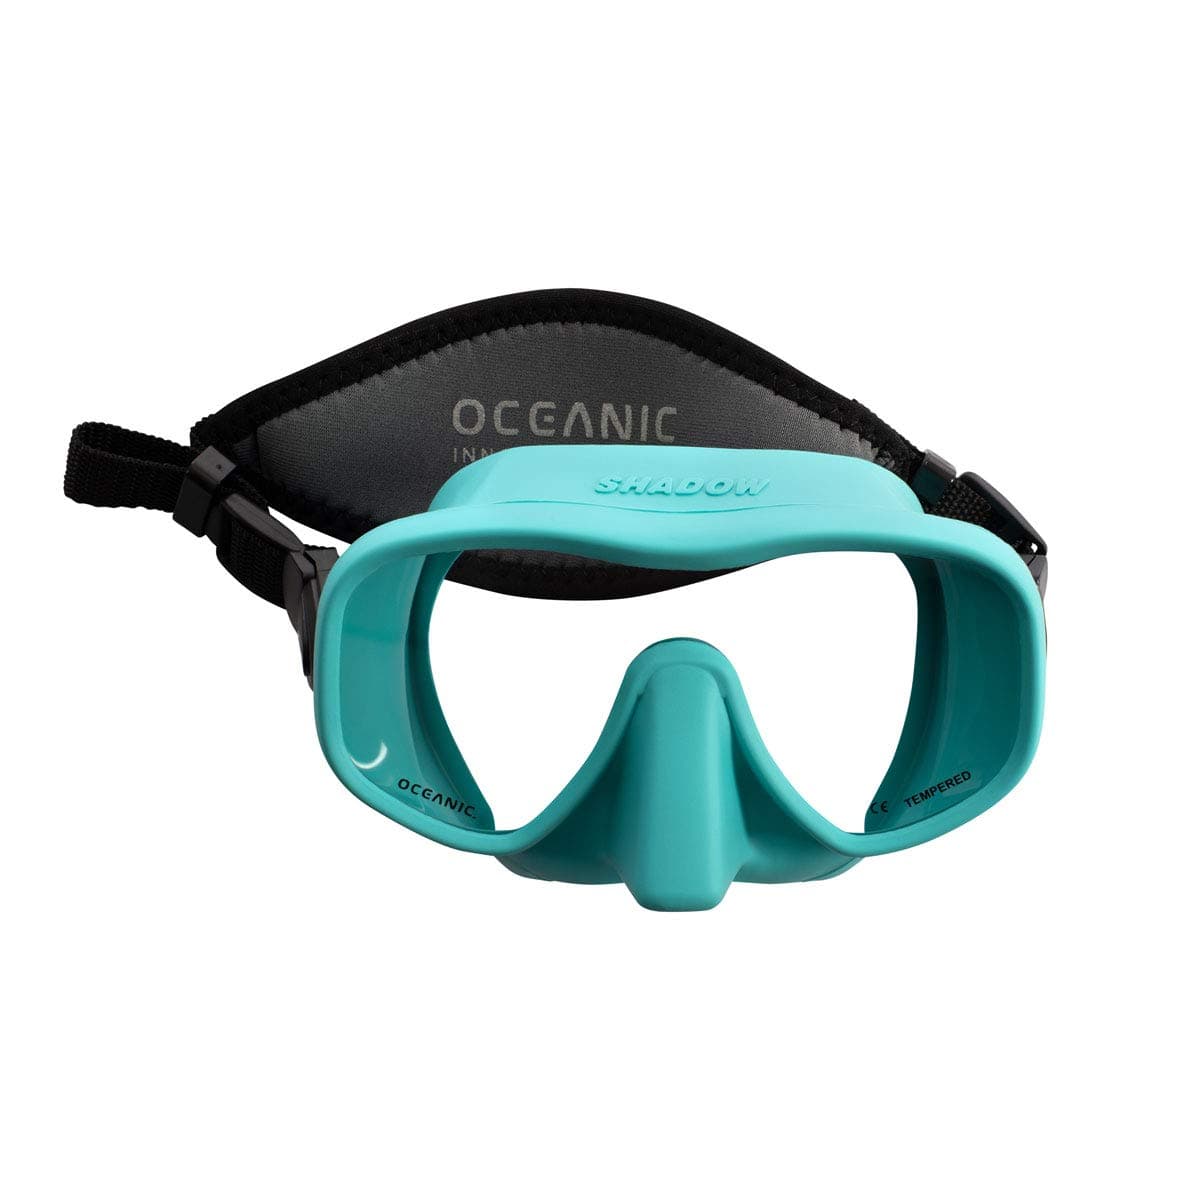 Oceanic Shadow Mask - Sea Blue - 4